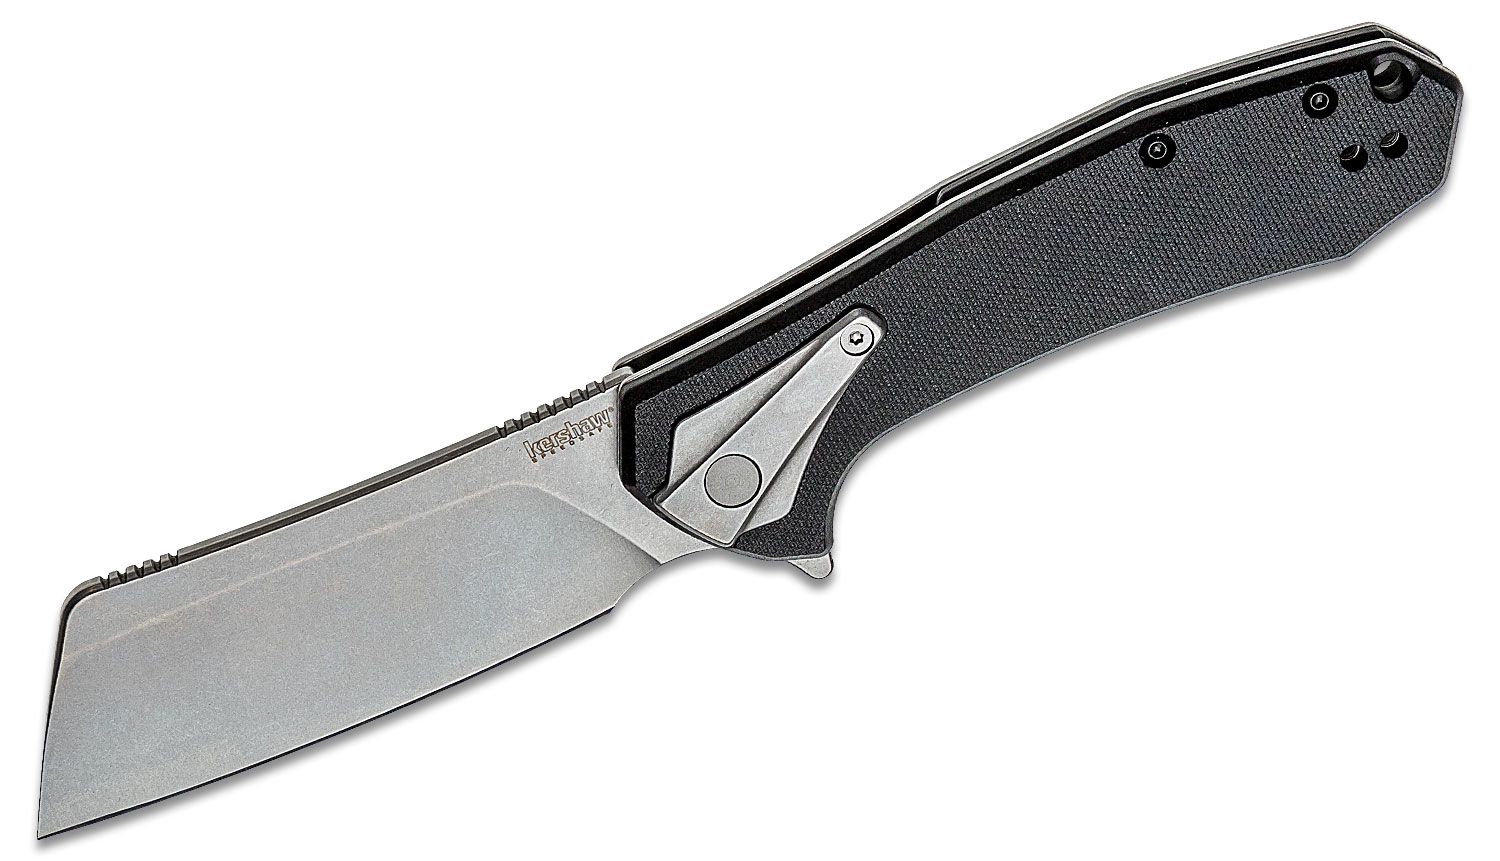 Central Exclusive Black ABS Plastic Dual-Action Handheld Knife Sharpener - 7 1/2L